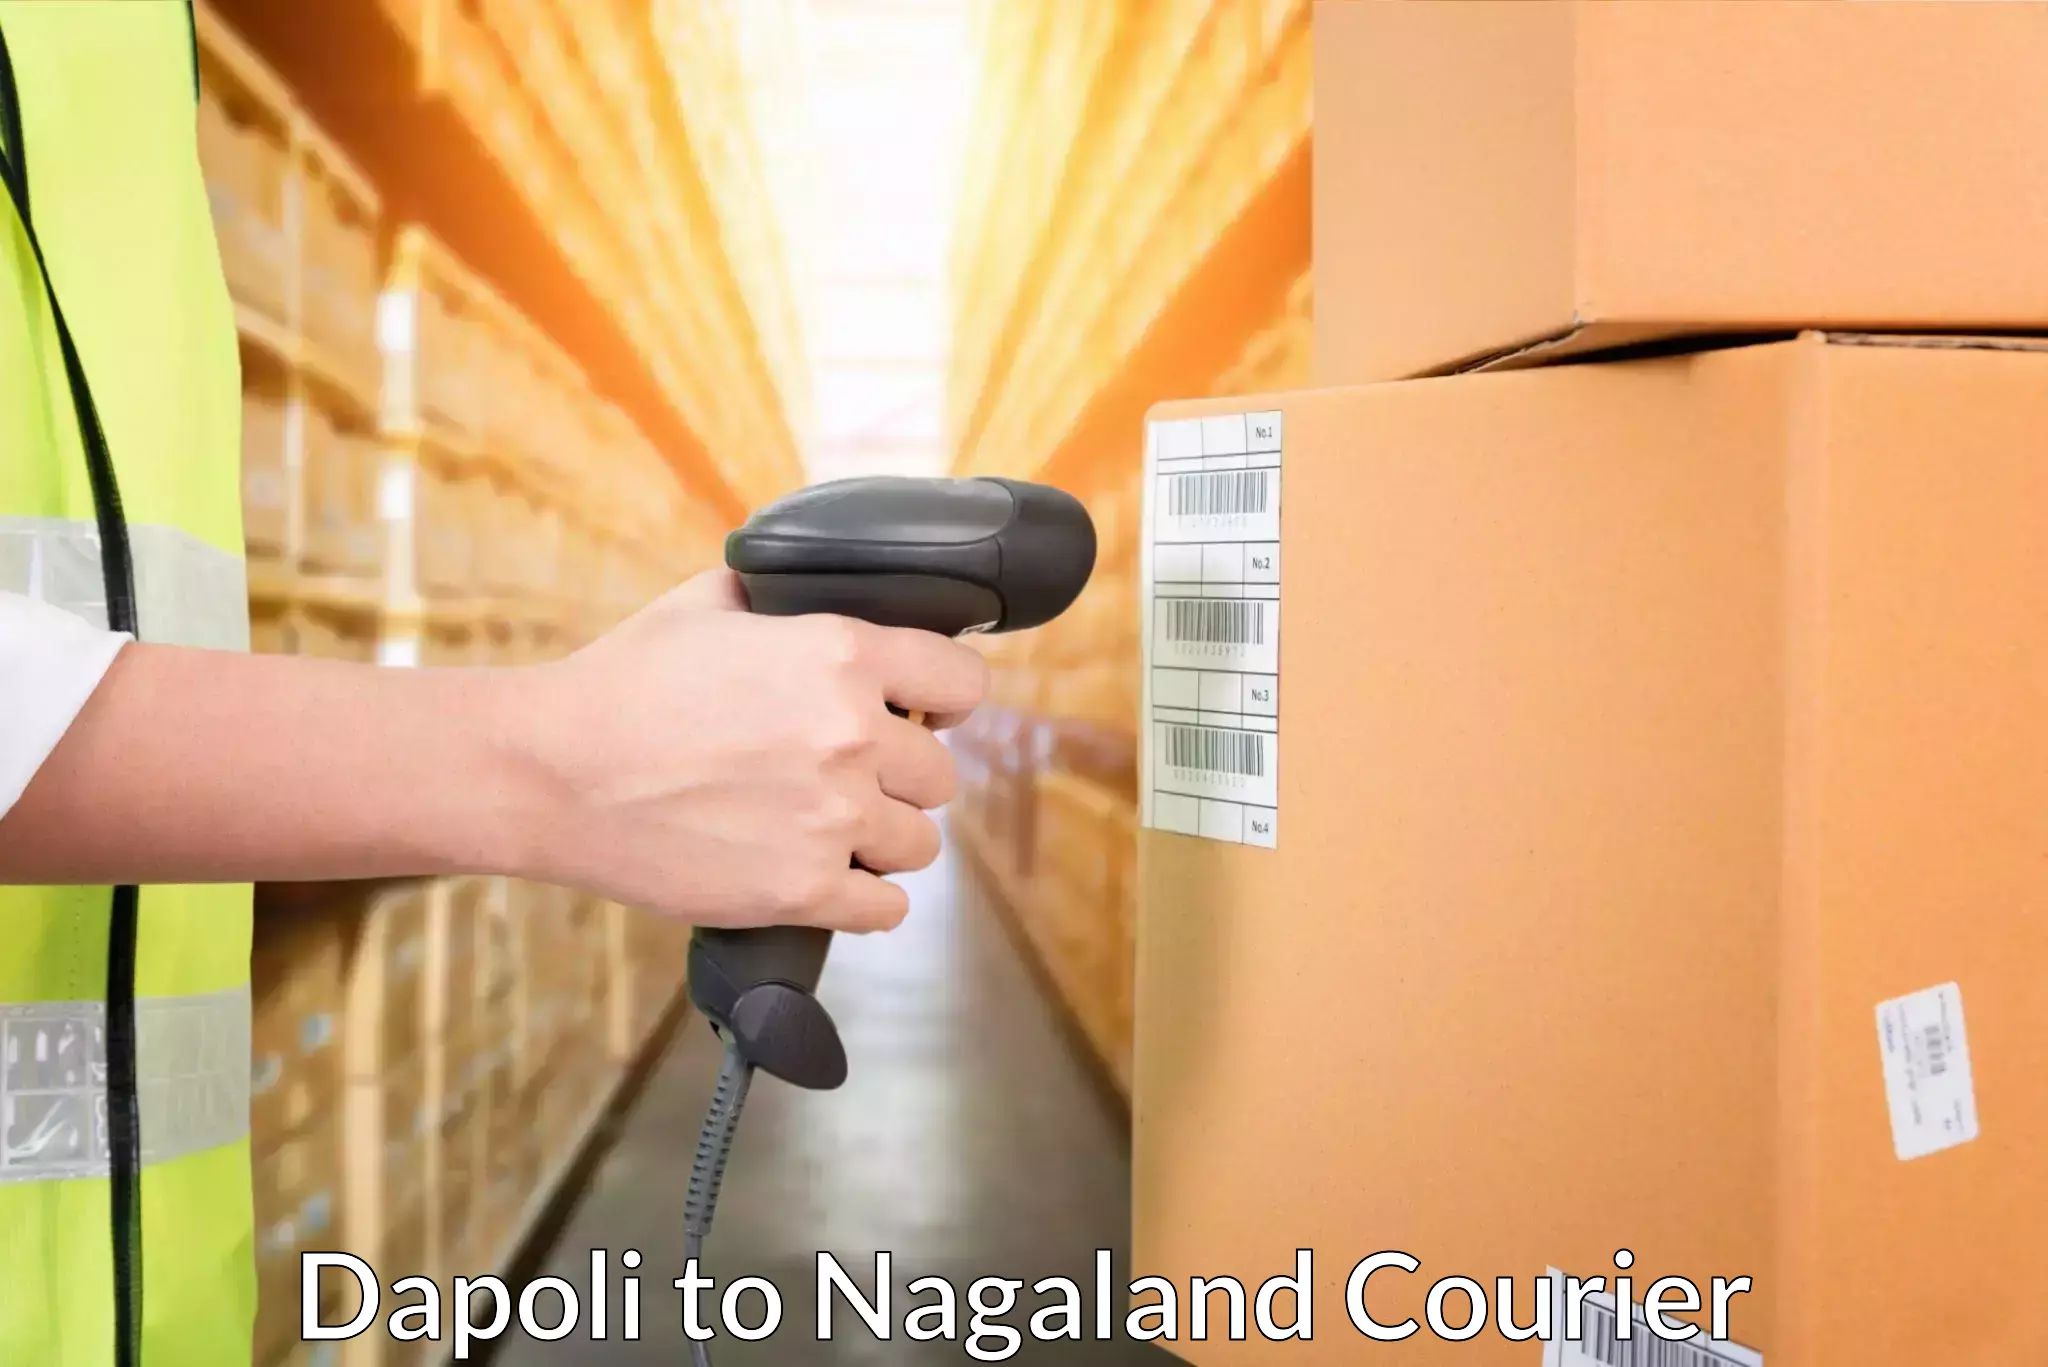 Professional courier handling Dapoli to Dimapur